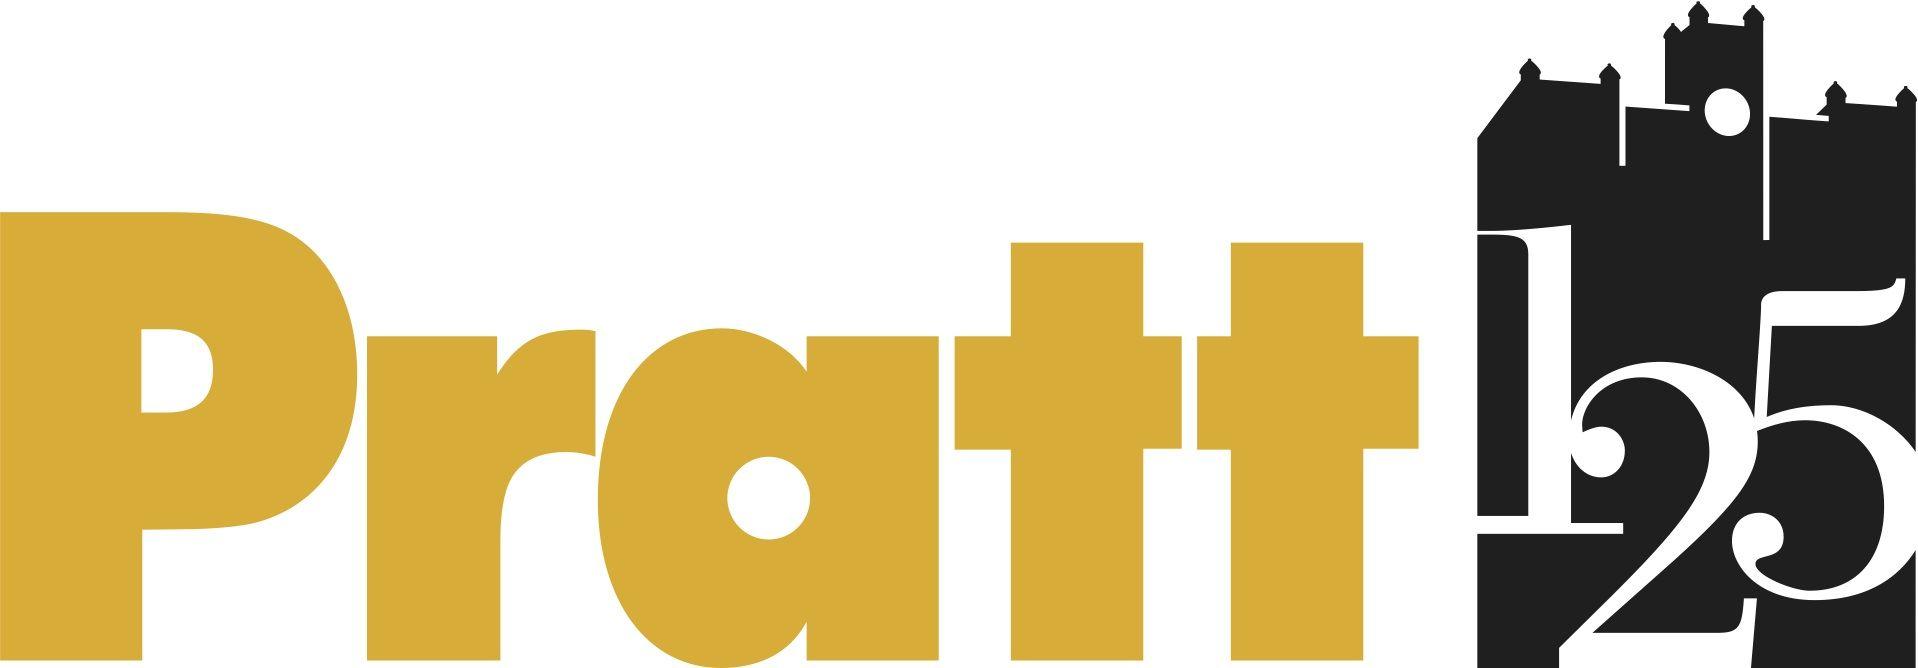 Pratt Institute Logo - Climate Leadership Award Winners